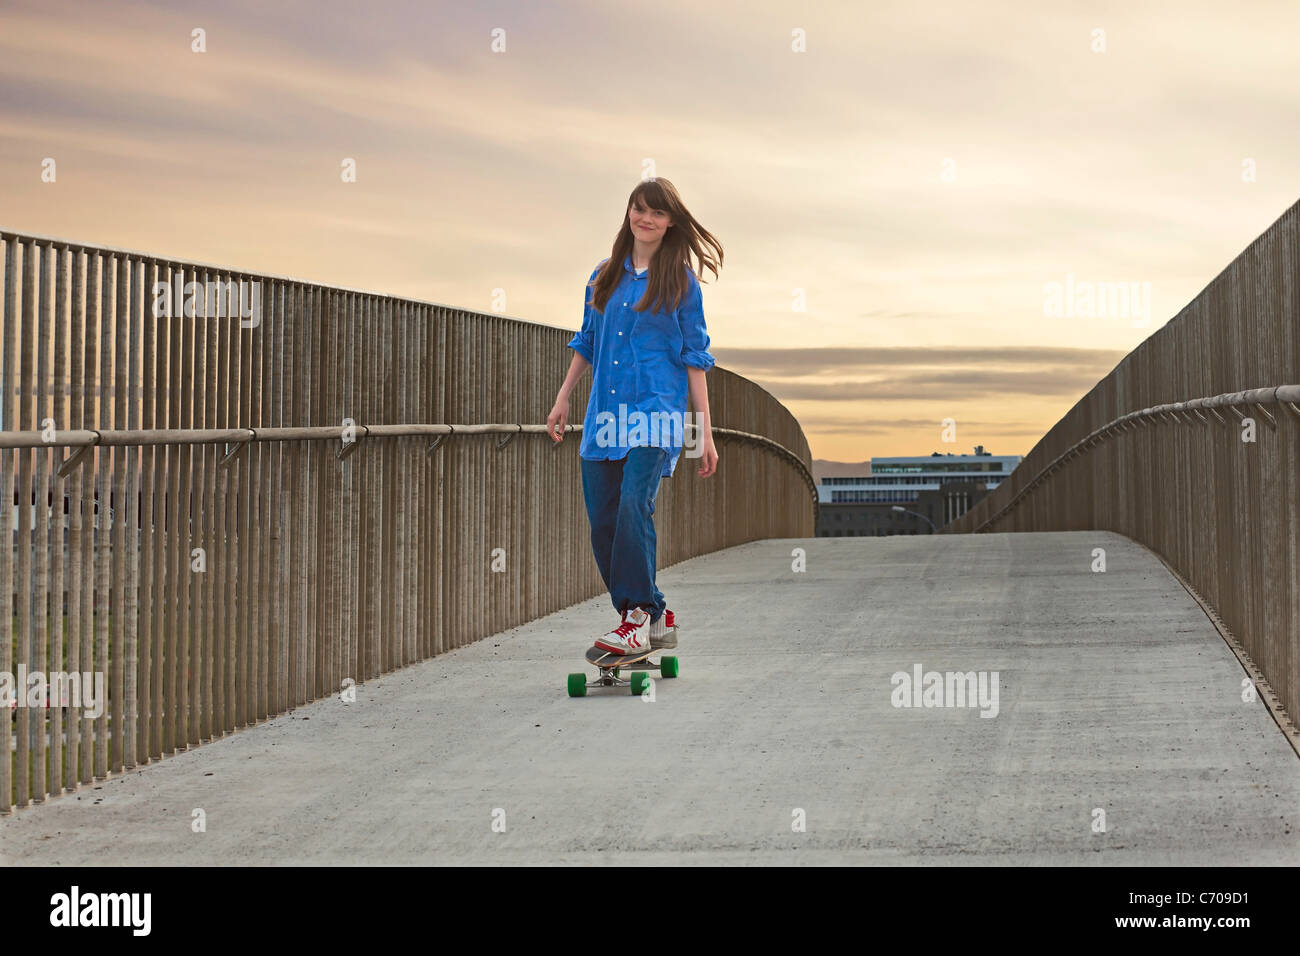 Girl riding skateboard on walkway Stock Photo